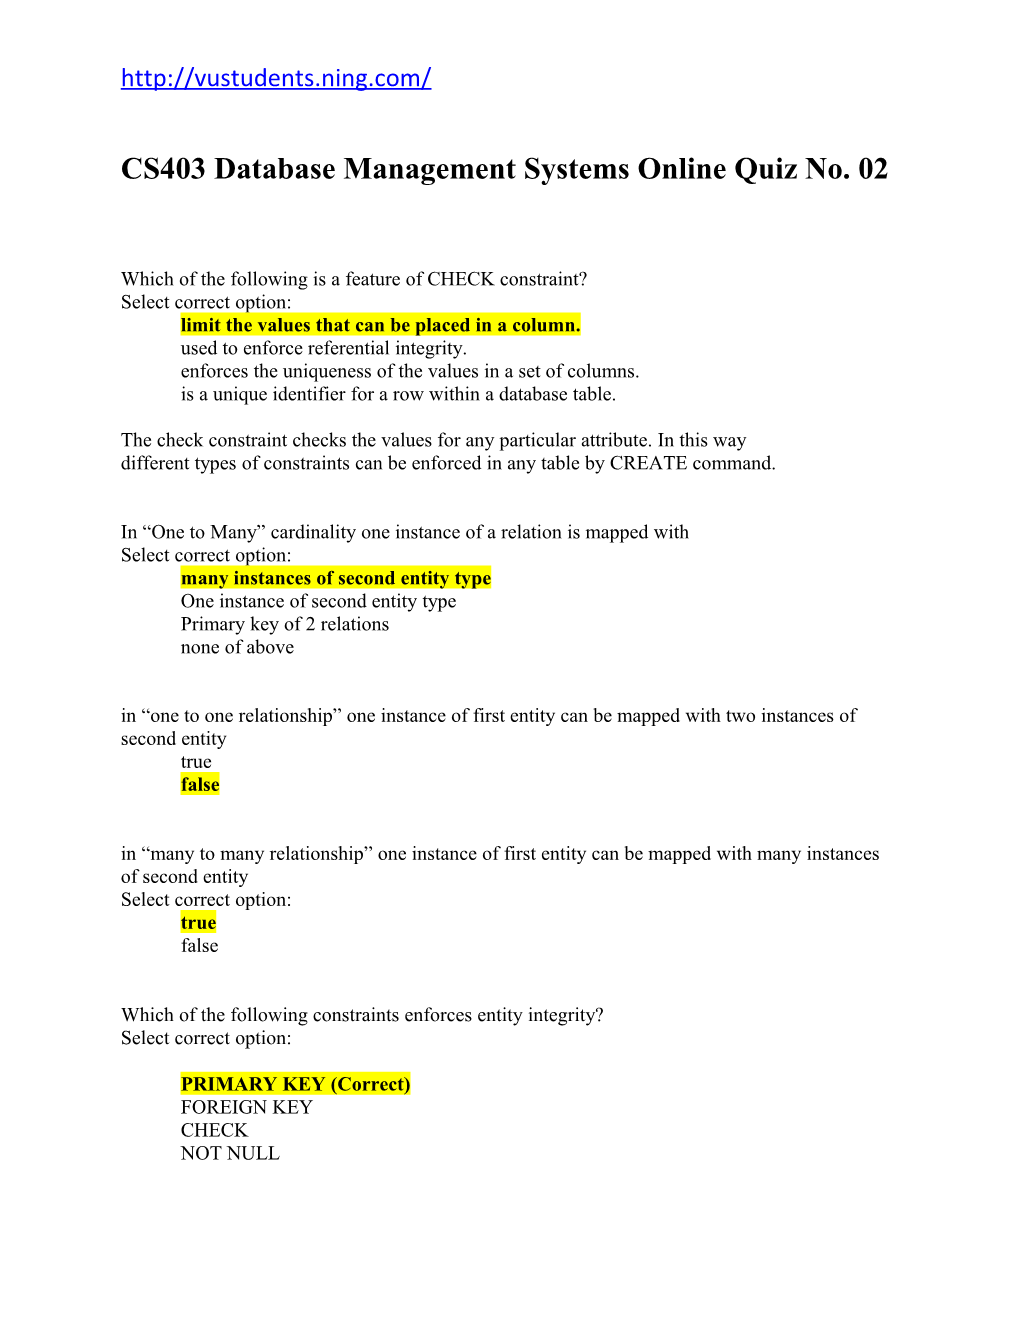 CS403 Database Management Systems Online Quiz No. 02